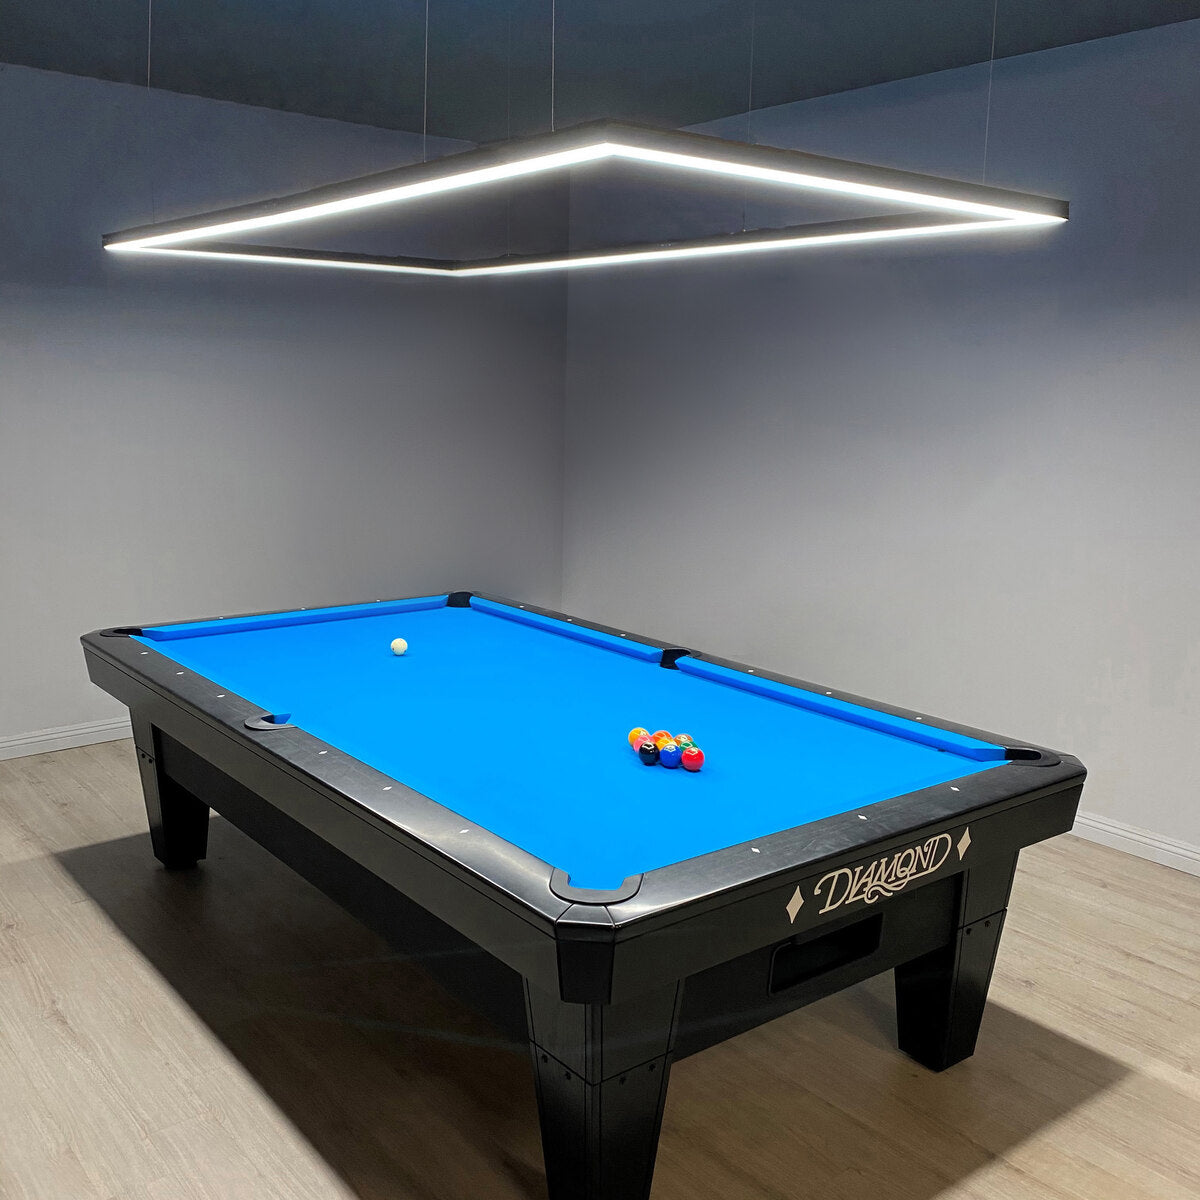 LED pool table light over a diamond pool table 